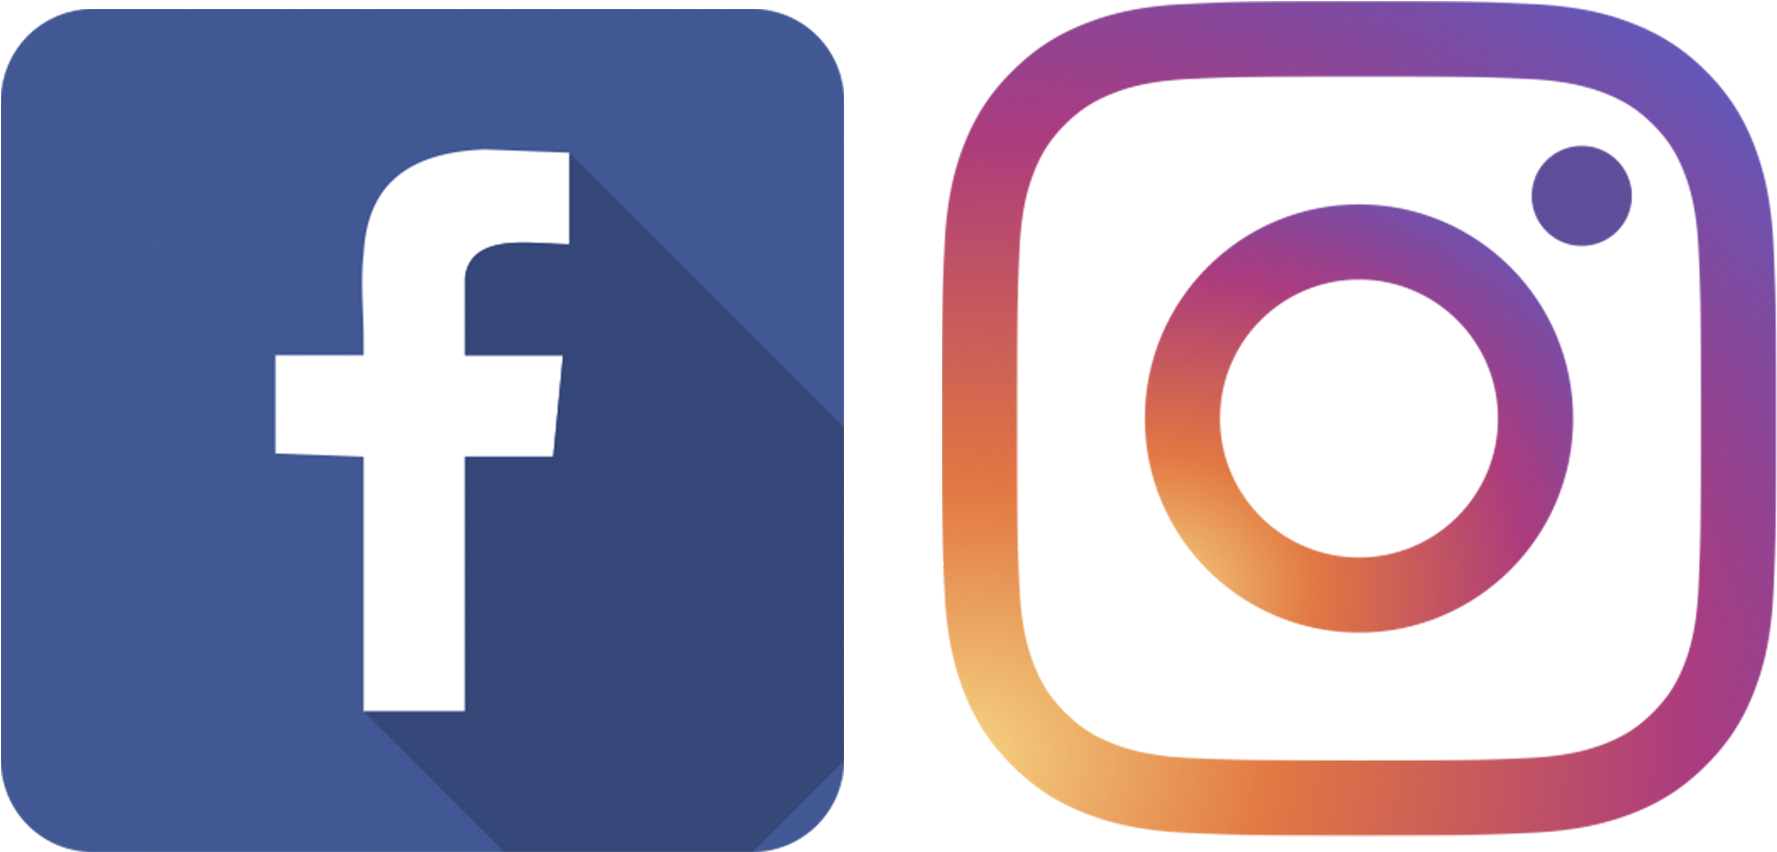 Logo Instagram Photos Free Download Image PNG Image